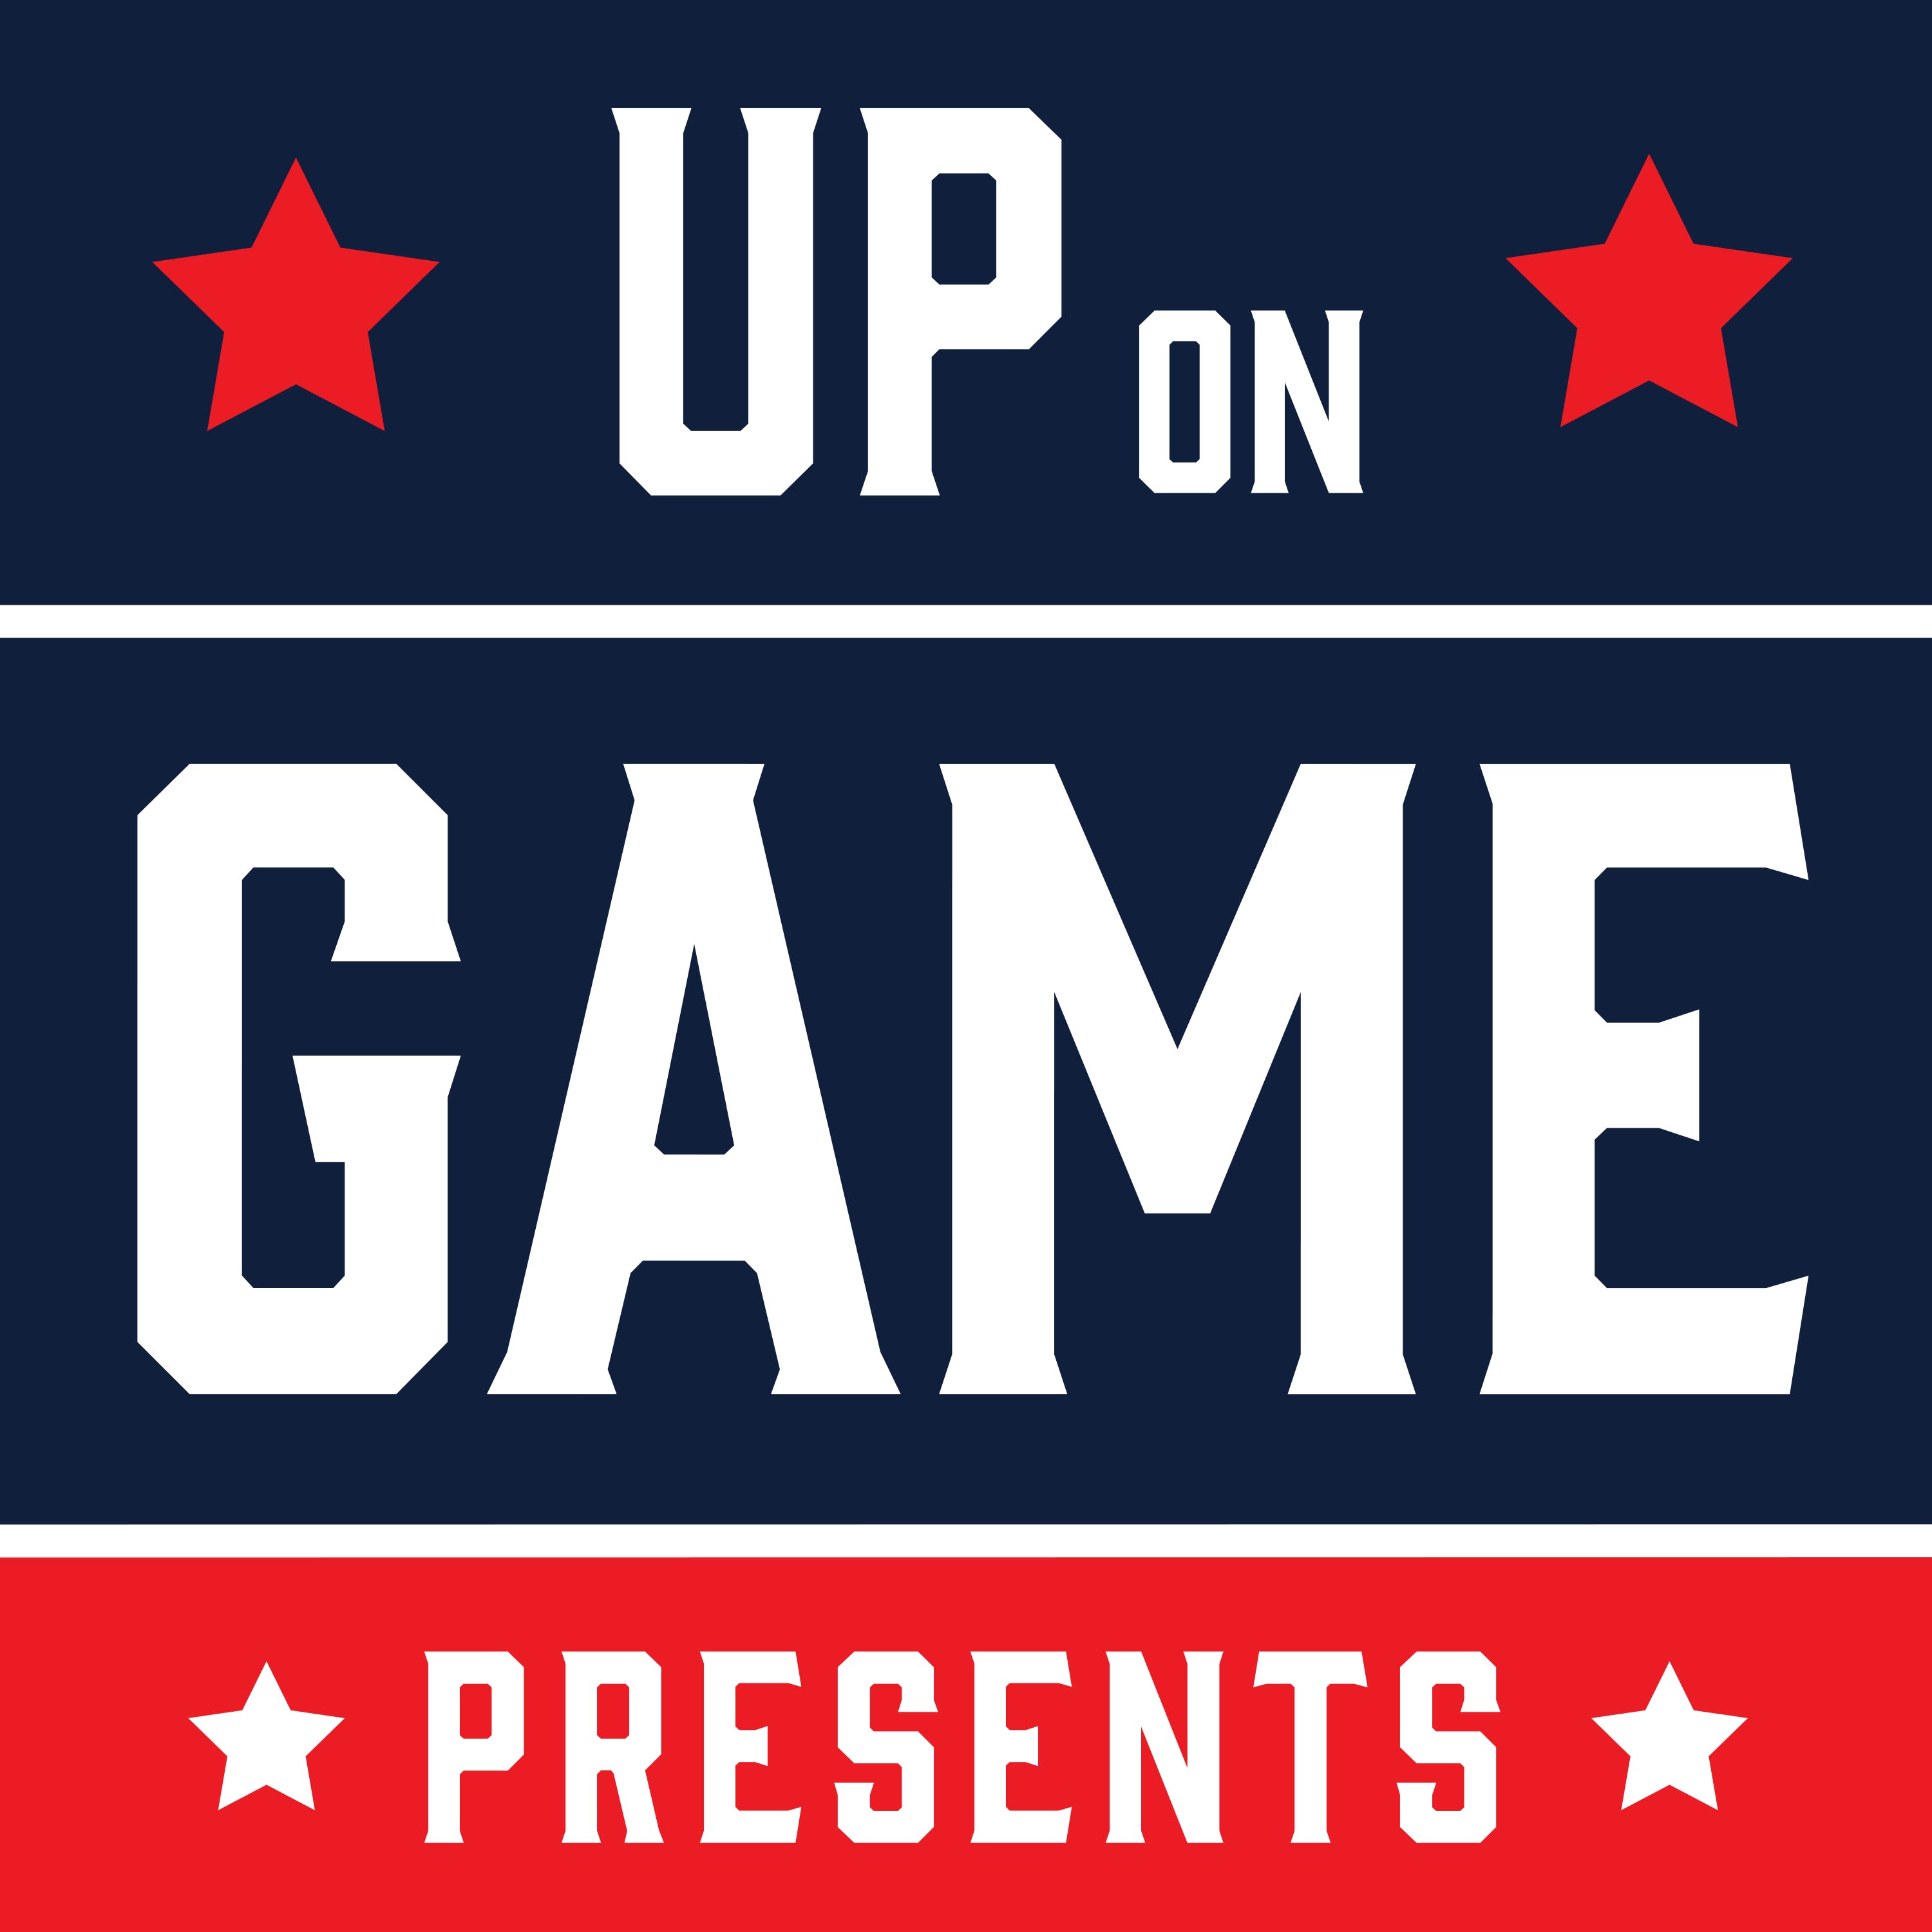 "Y'ALL NOT US & IT'S A REASON Y'ALL NOT US" Up On Game Presents LaVar Arrington Talks To Super Bowl Champion TJ Ward.